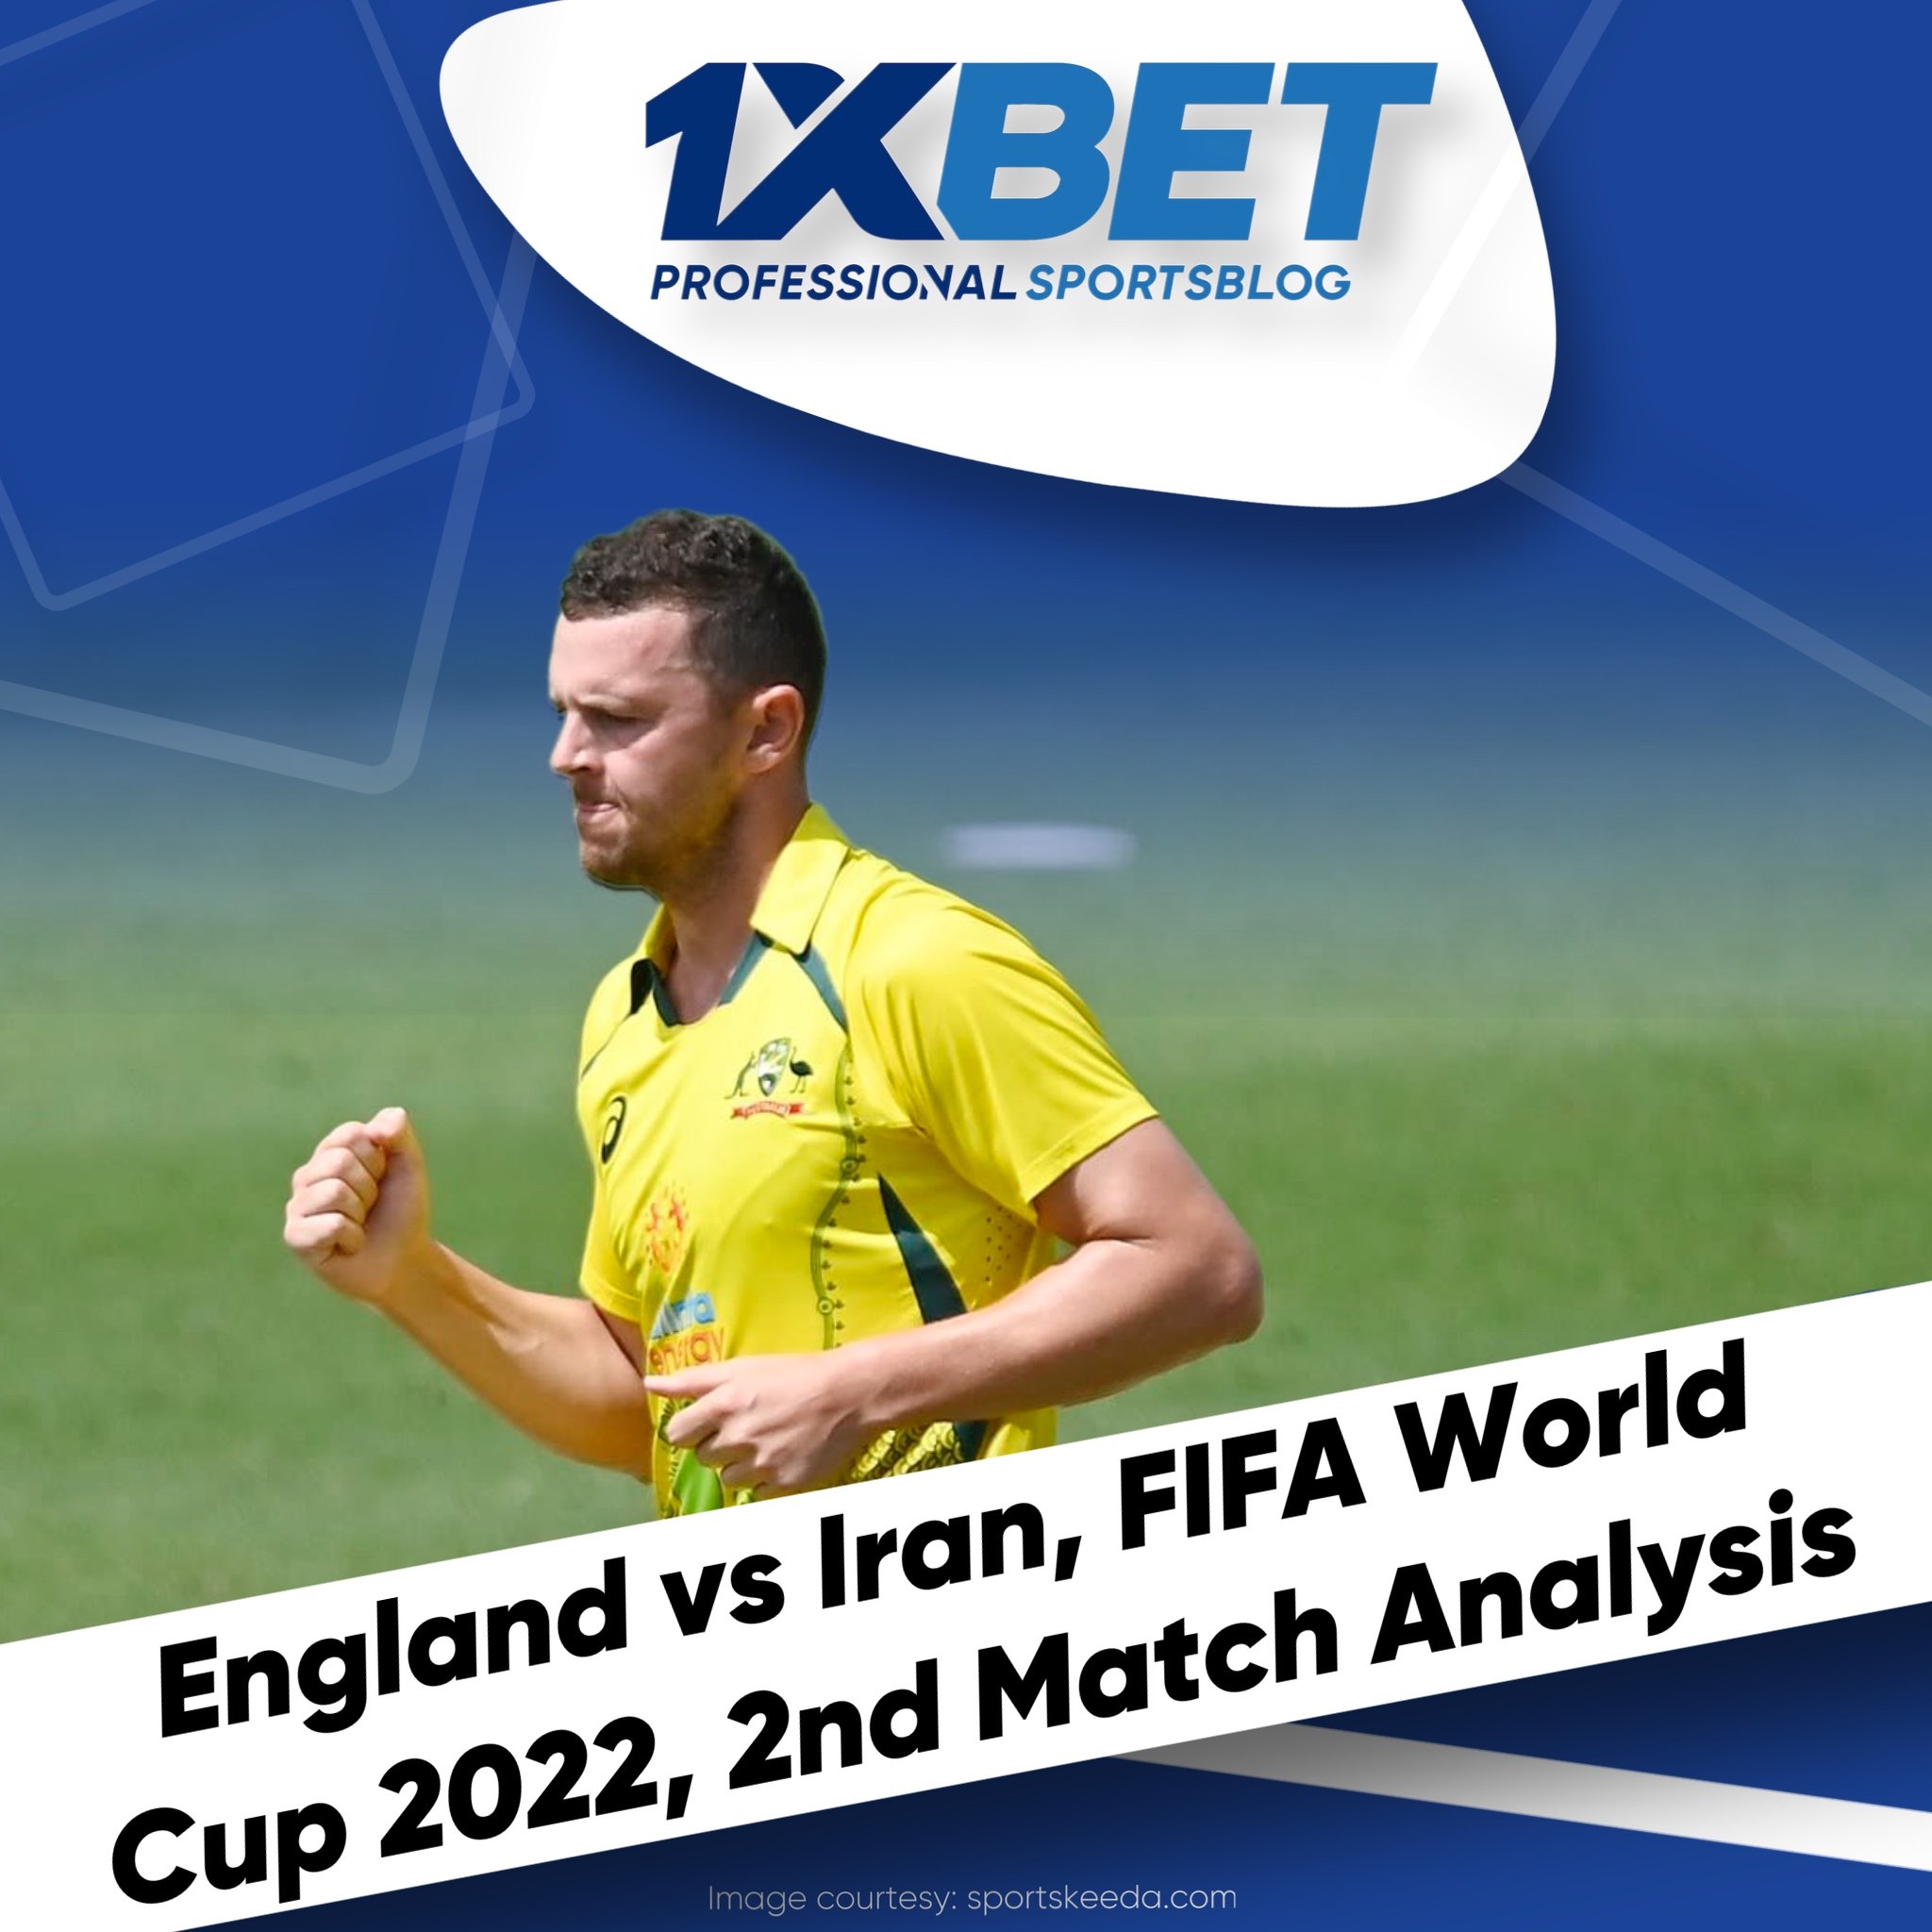 England vs Iran, FIFA World Cup 2022, 2nd Match Analysis